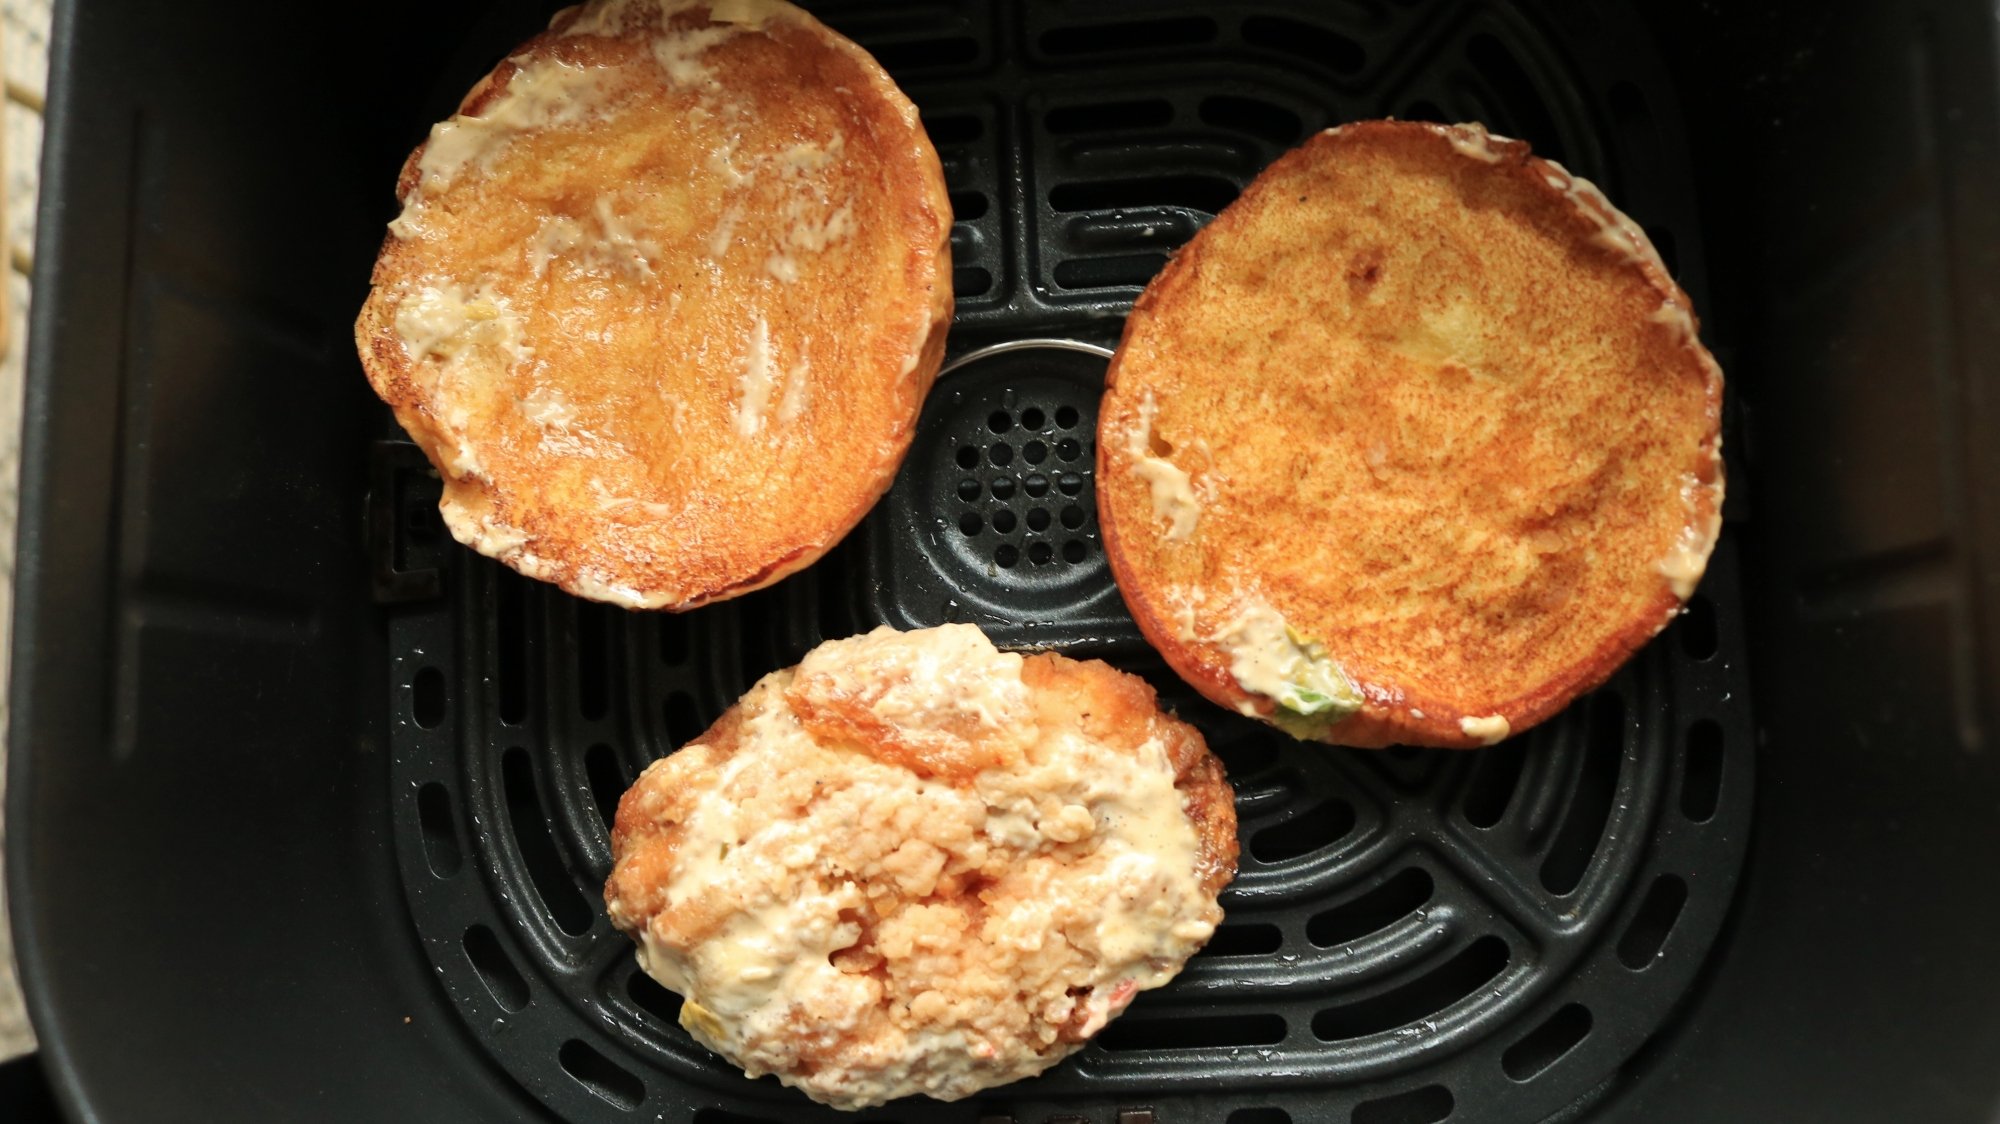 A burger bun and chicken patty in an air fryer basket.